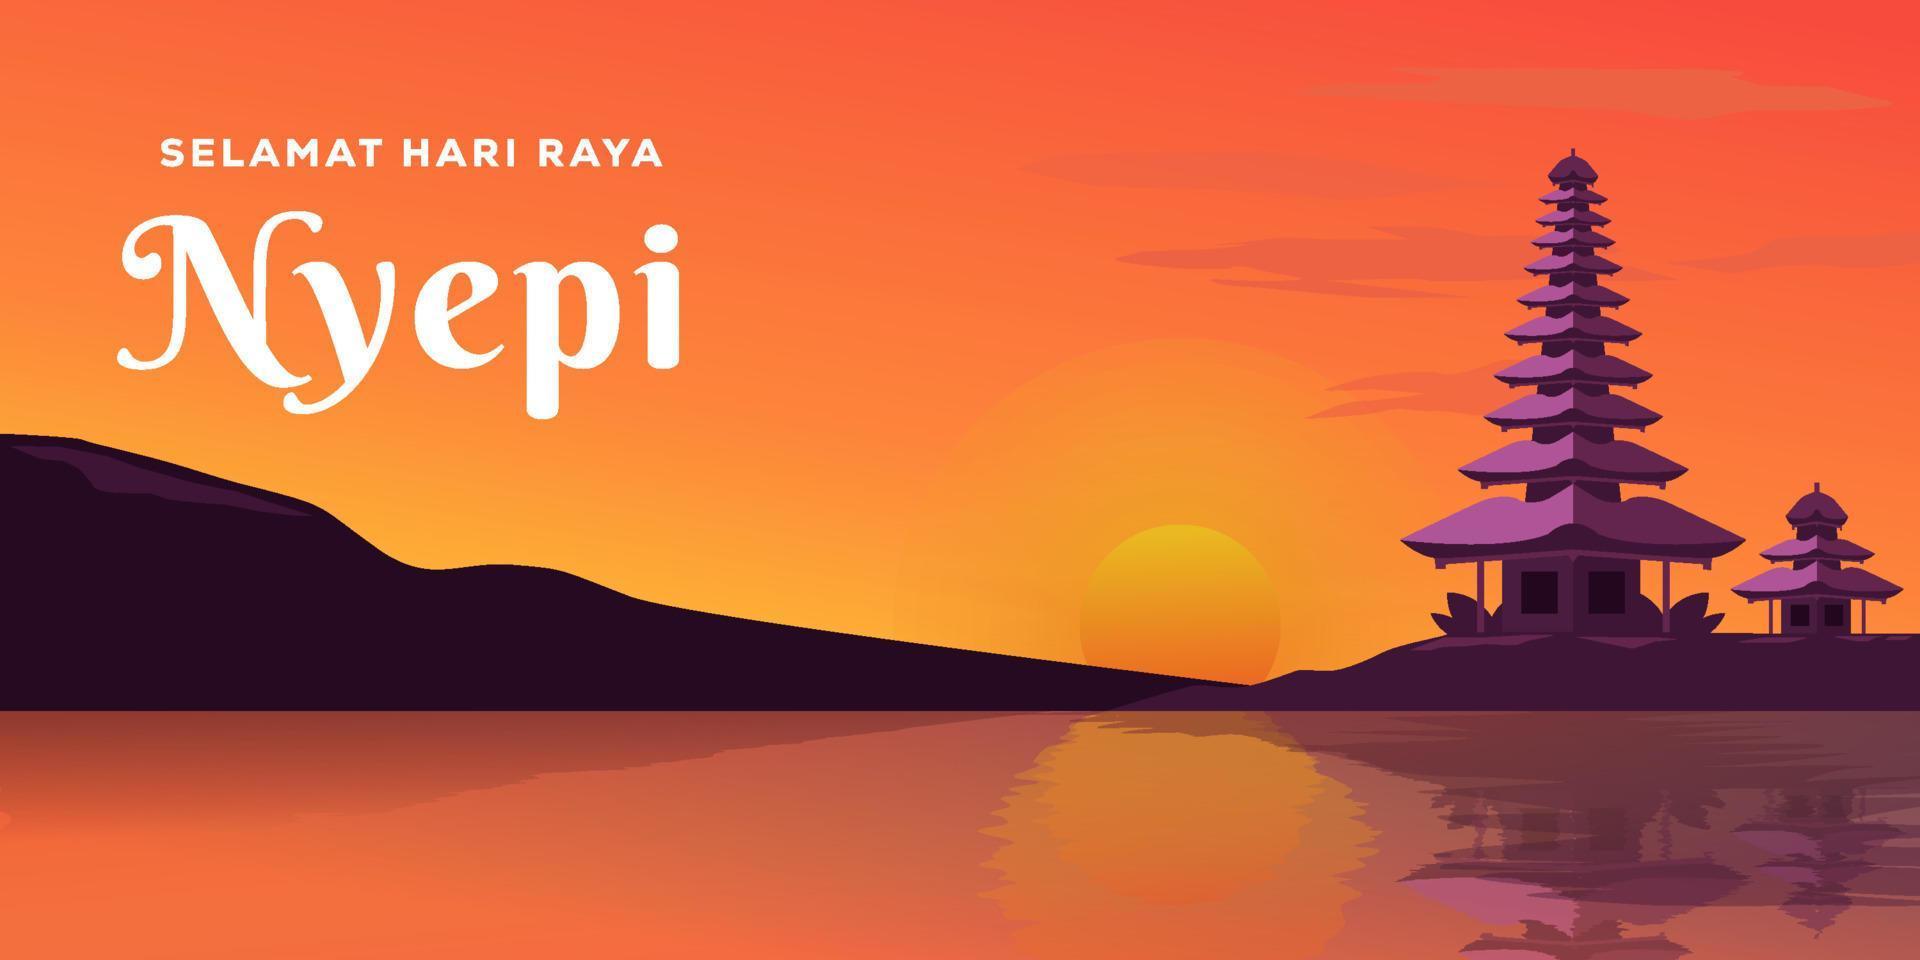 Bali's day of silence illustration background. Nyepi illustration greeting vector